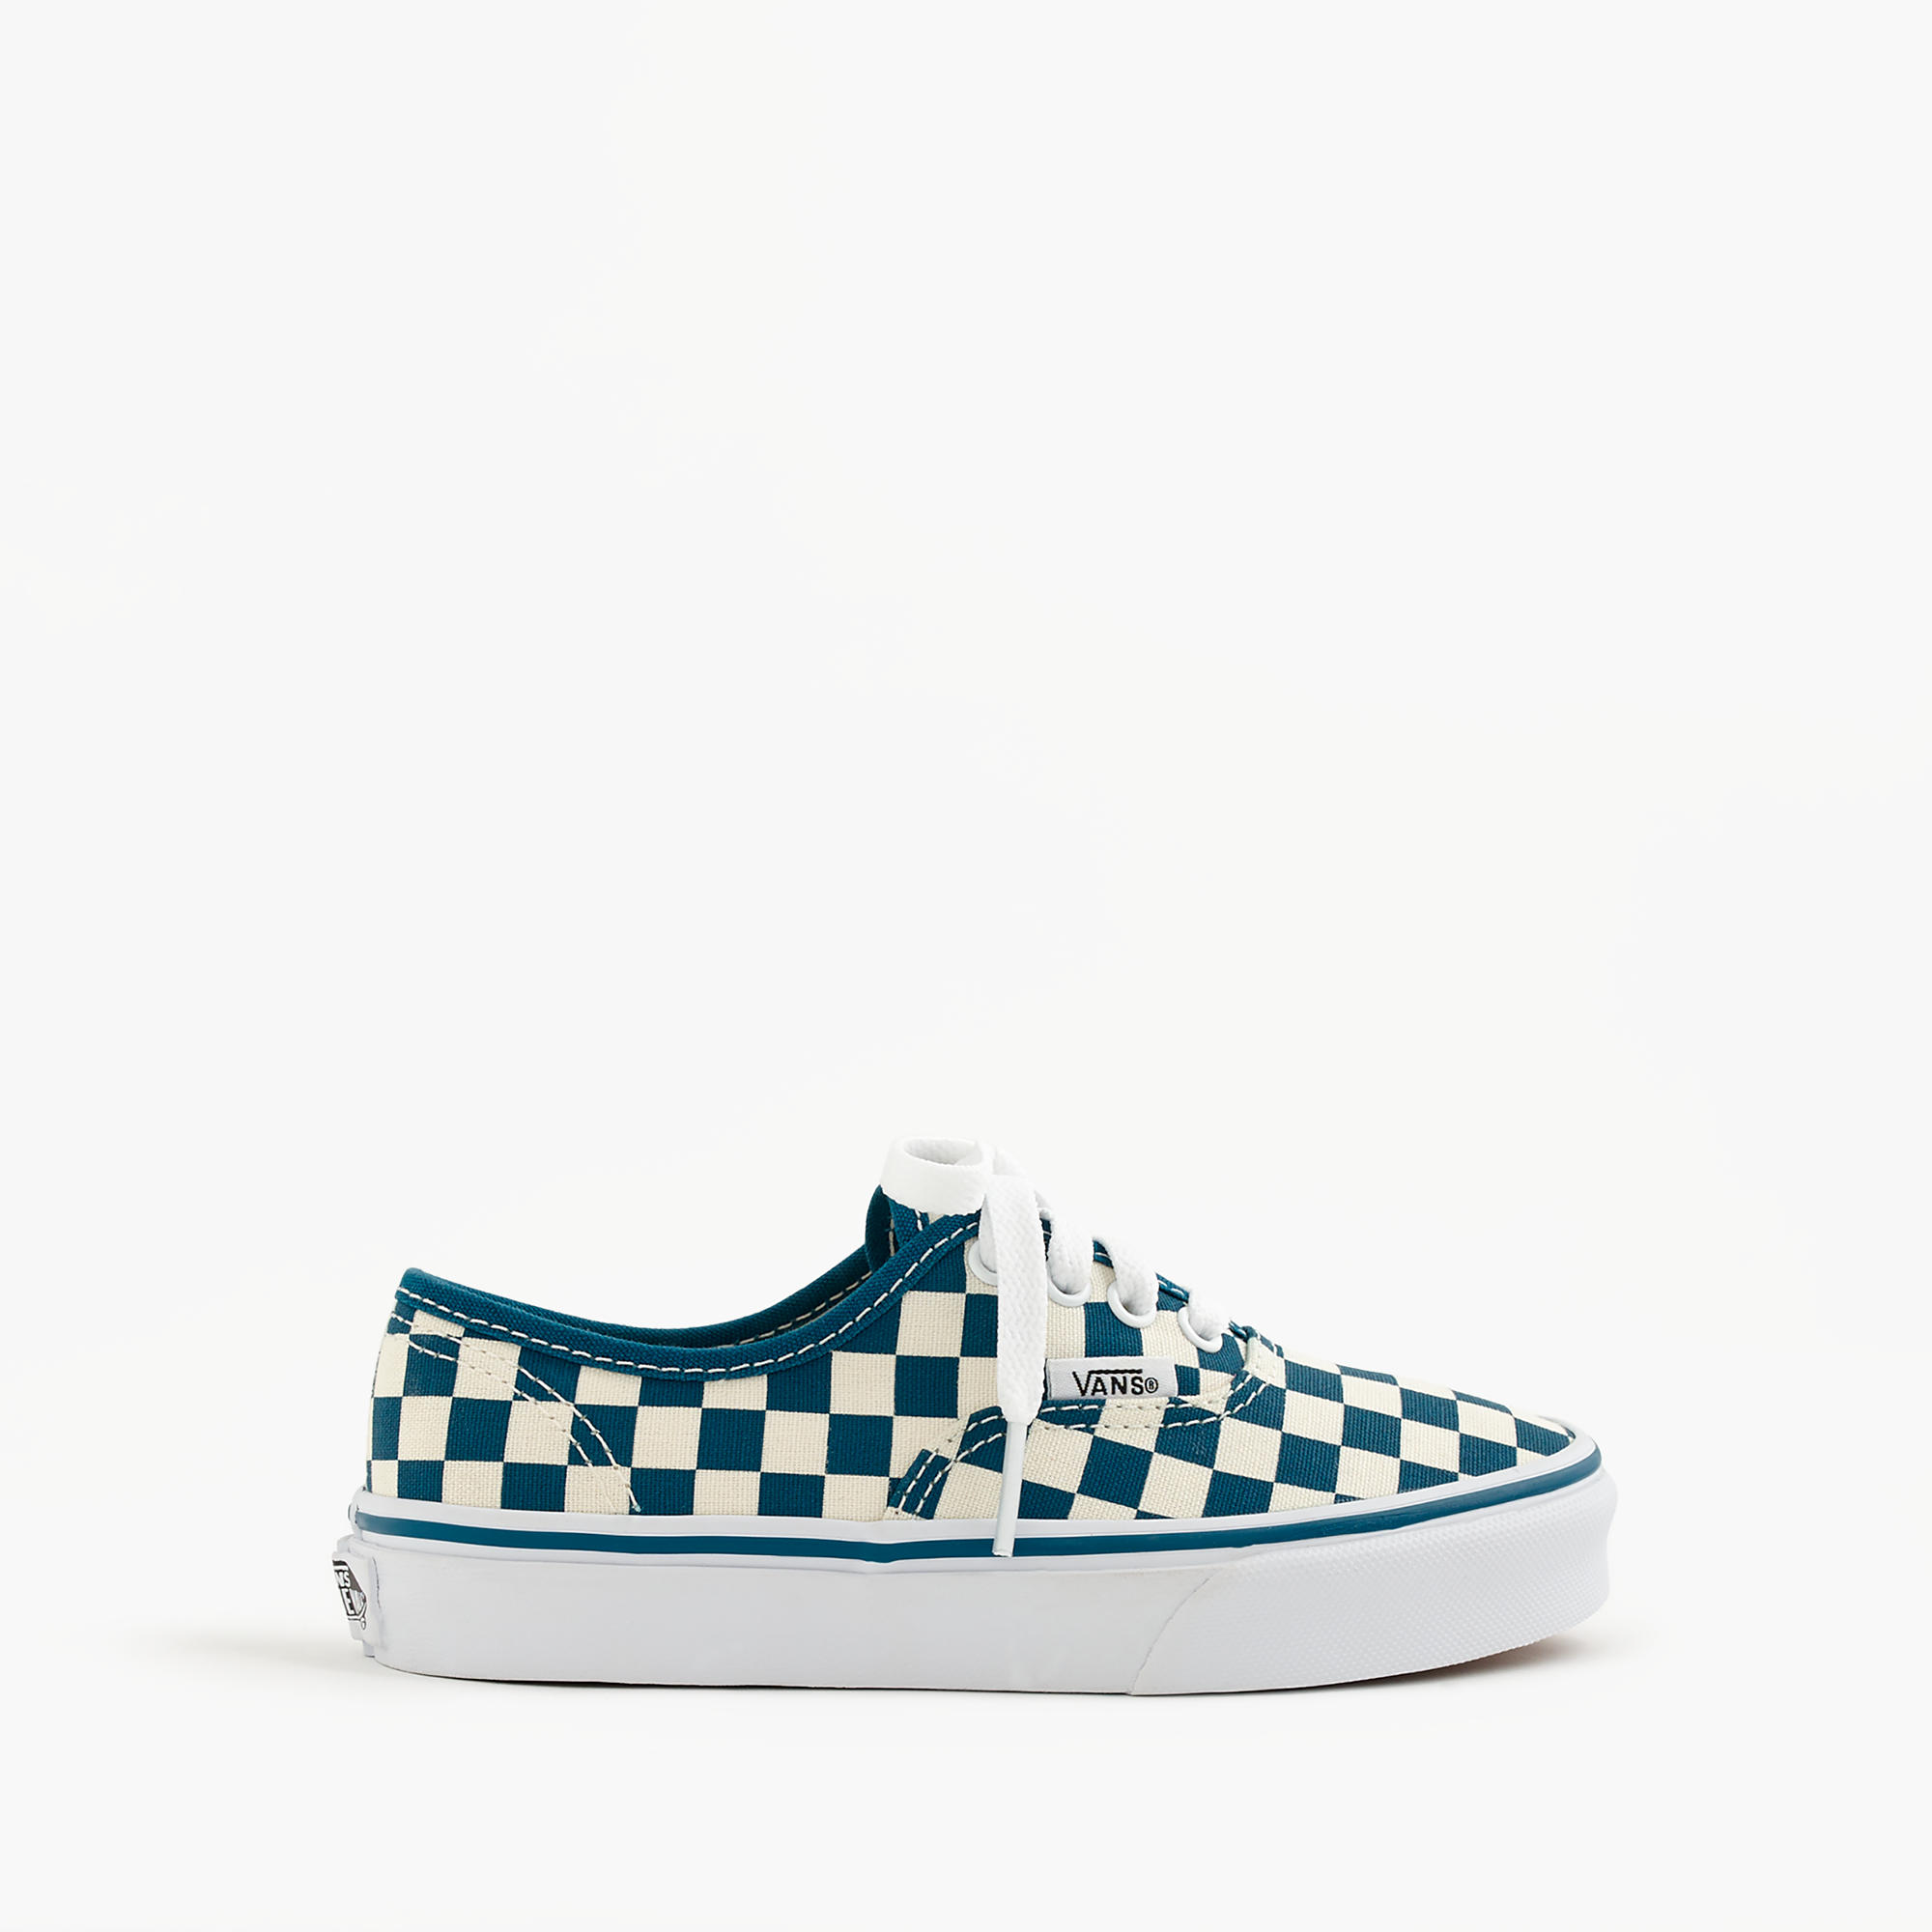 Kids' Vans® Authentic checkered sneakers : Boy sneakers | J.Crew